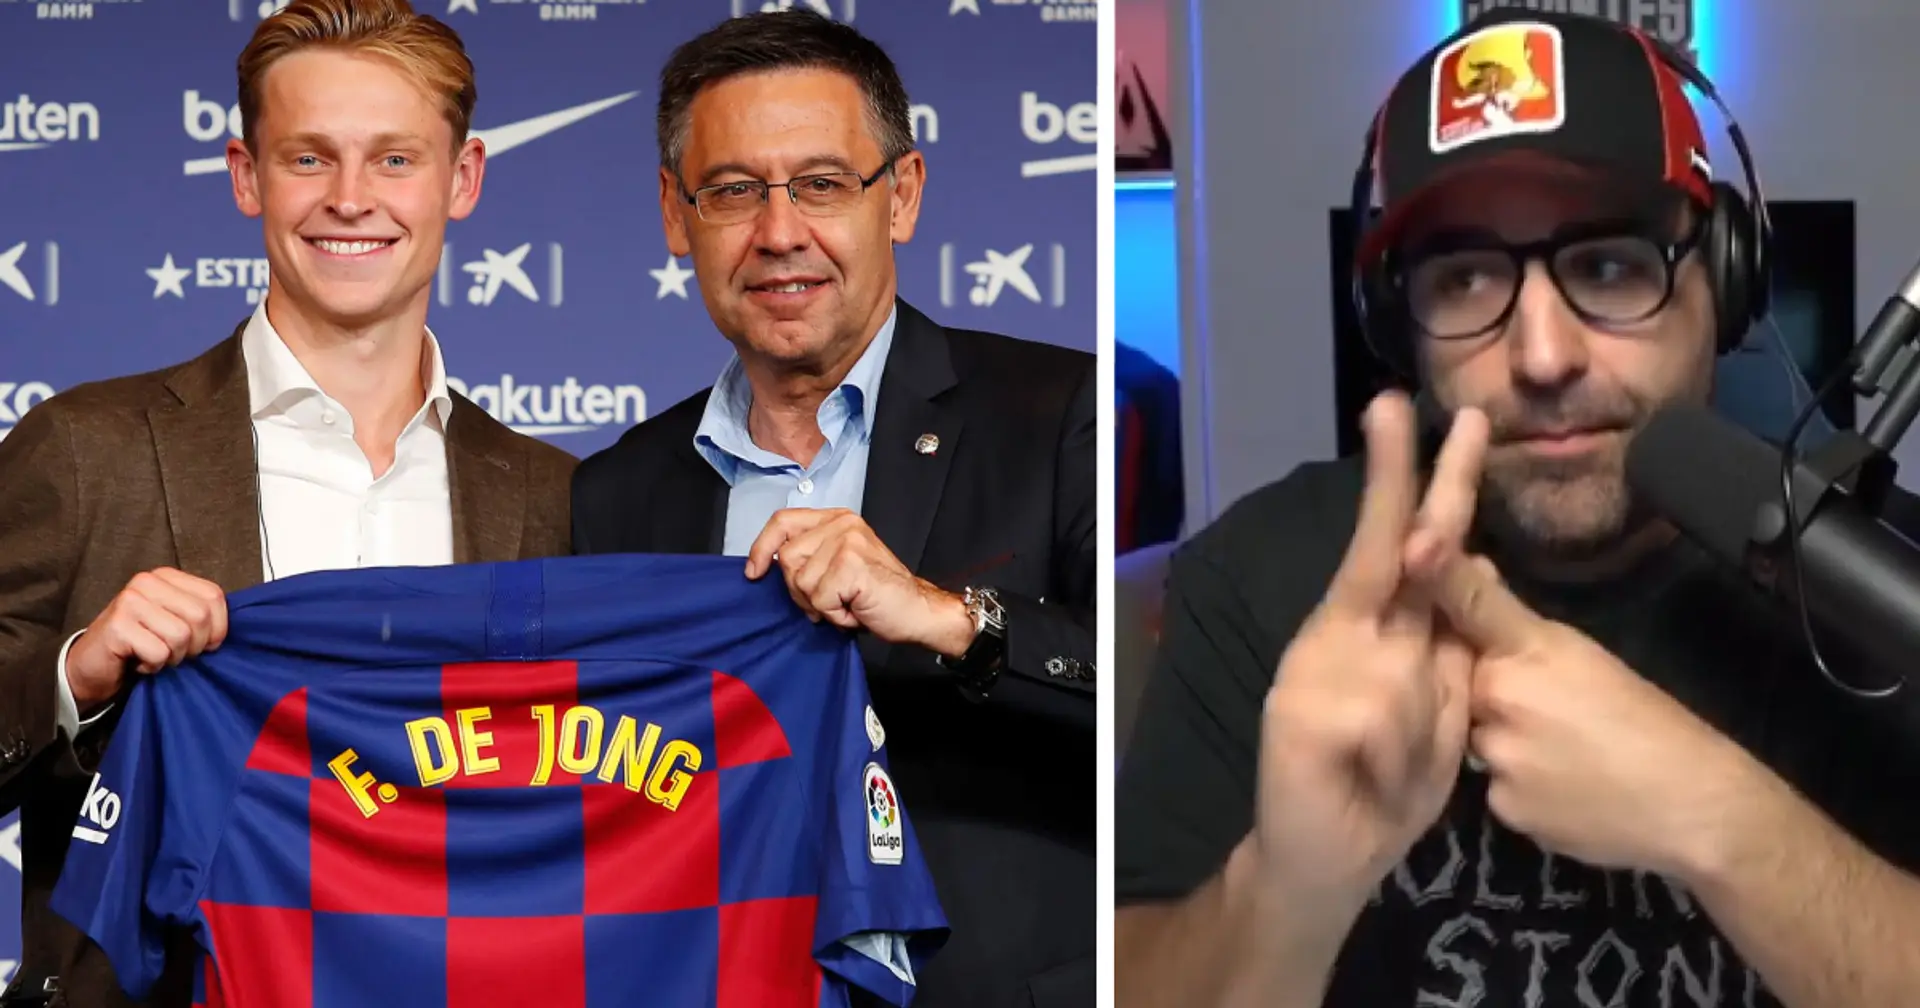 El Barça presenta la oferta final a Frenkie De Jong (fiabilidad: 5 estrellas)